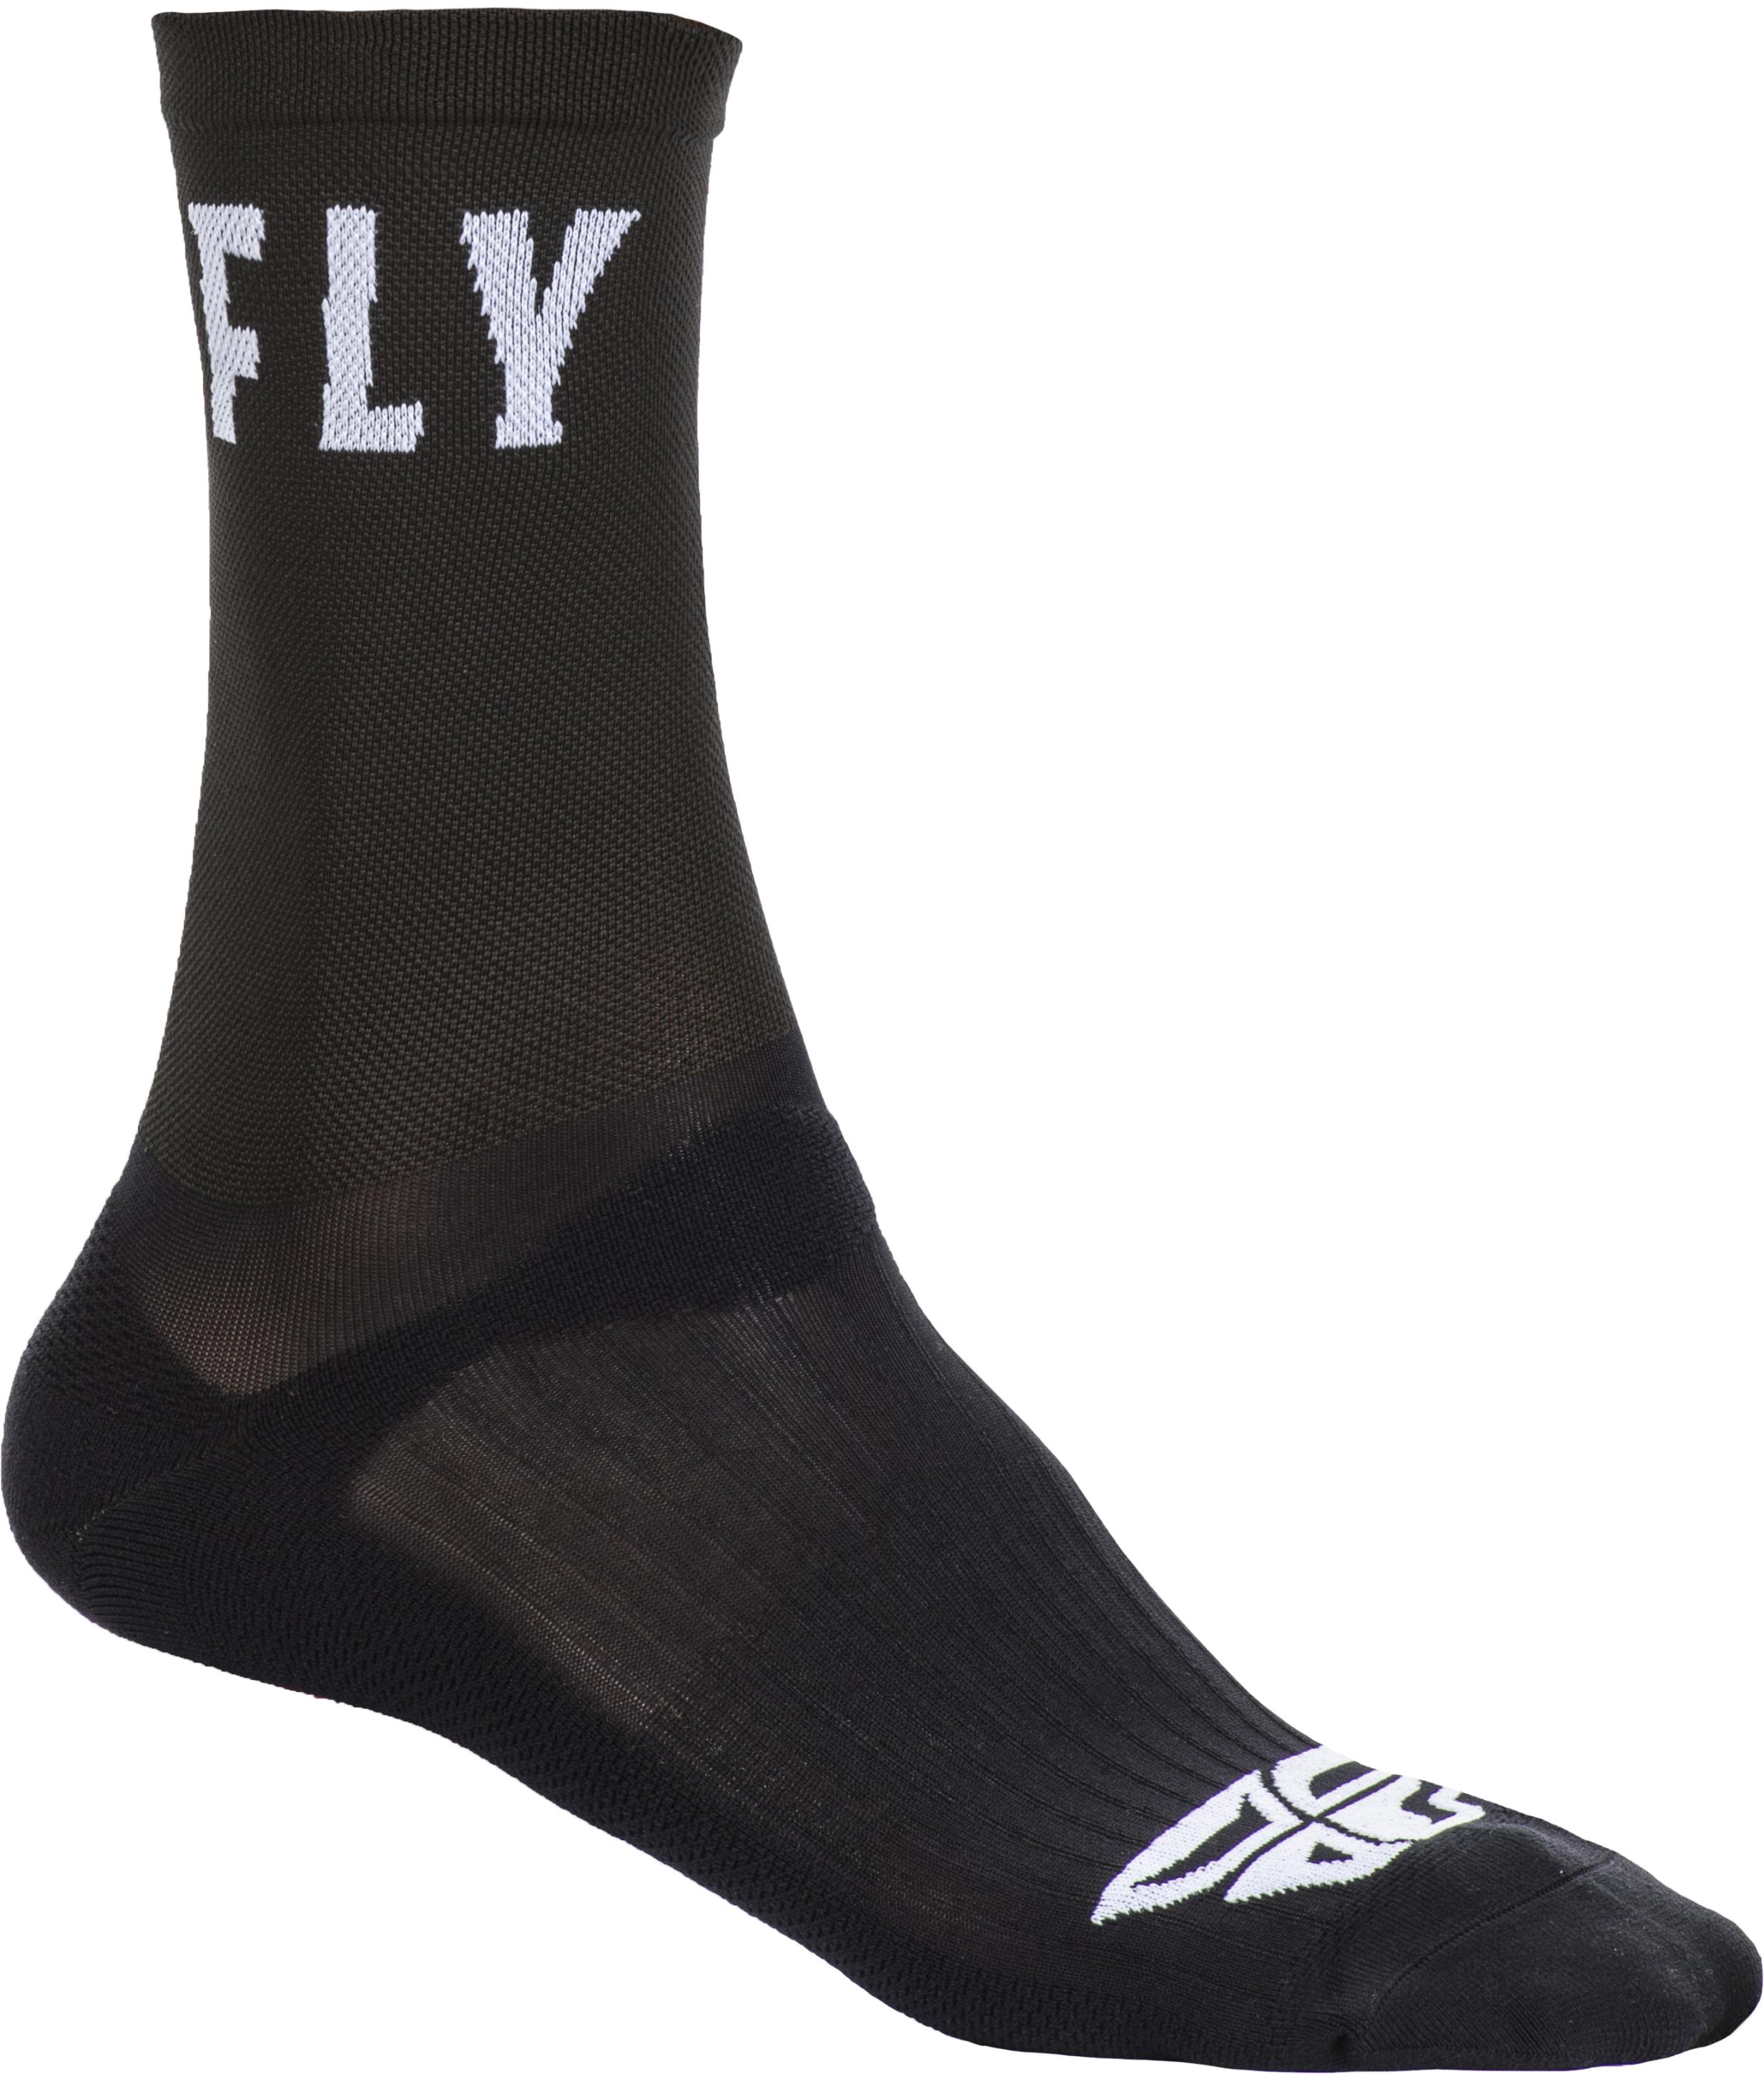 Fly Racing - Crew Socks - 191361173196